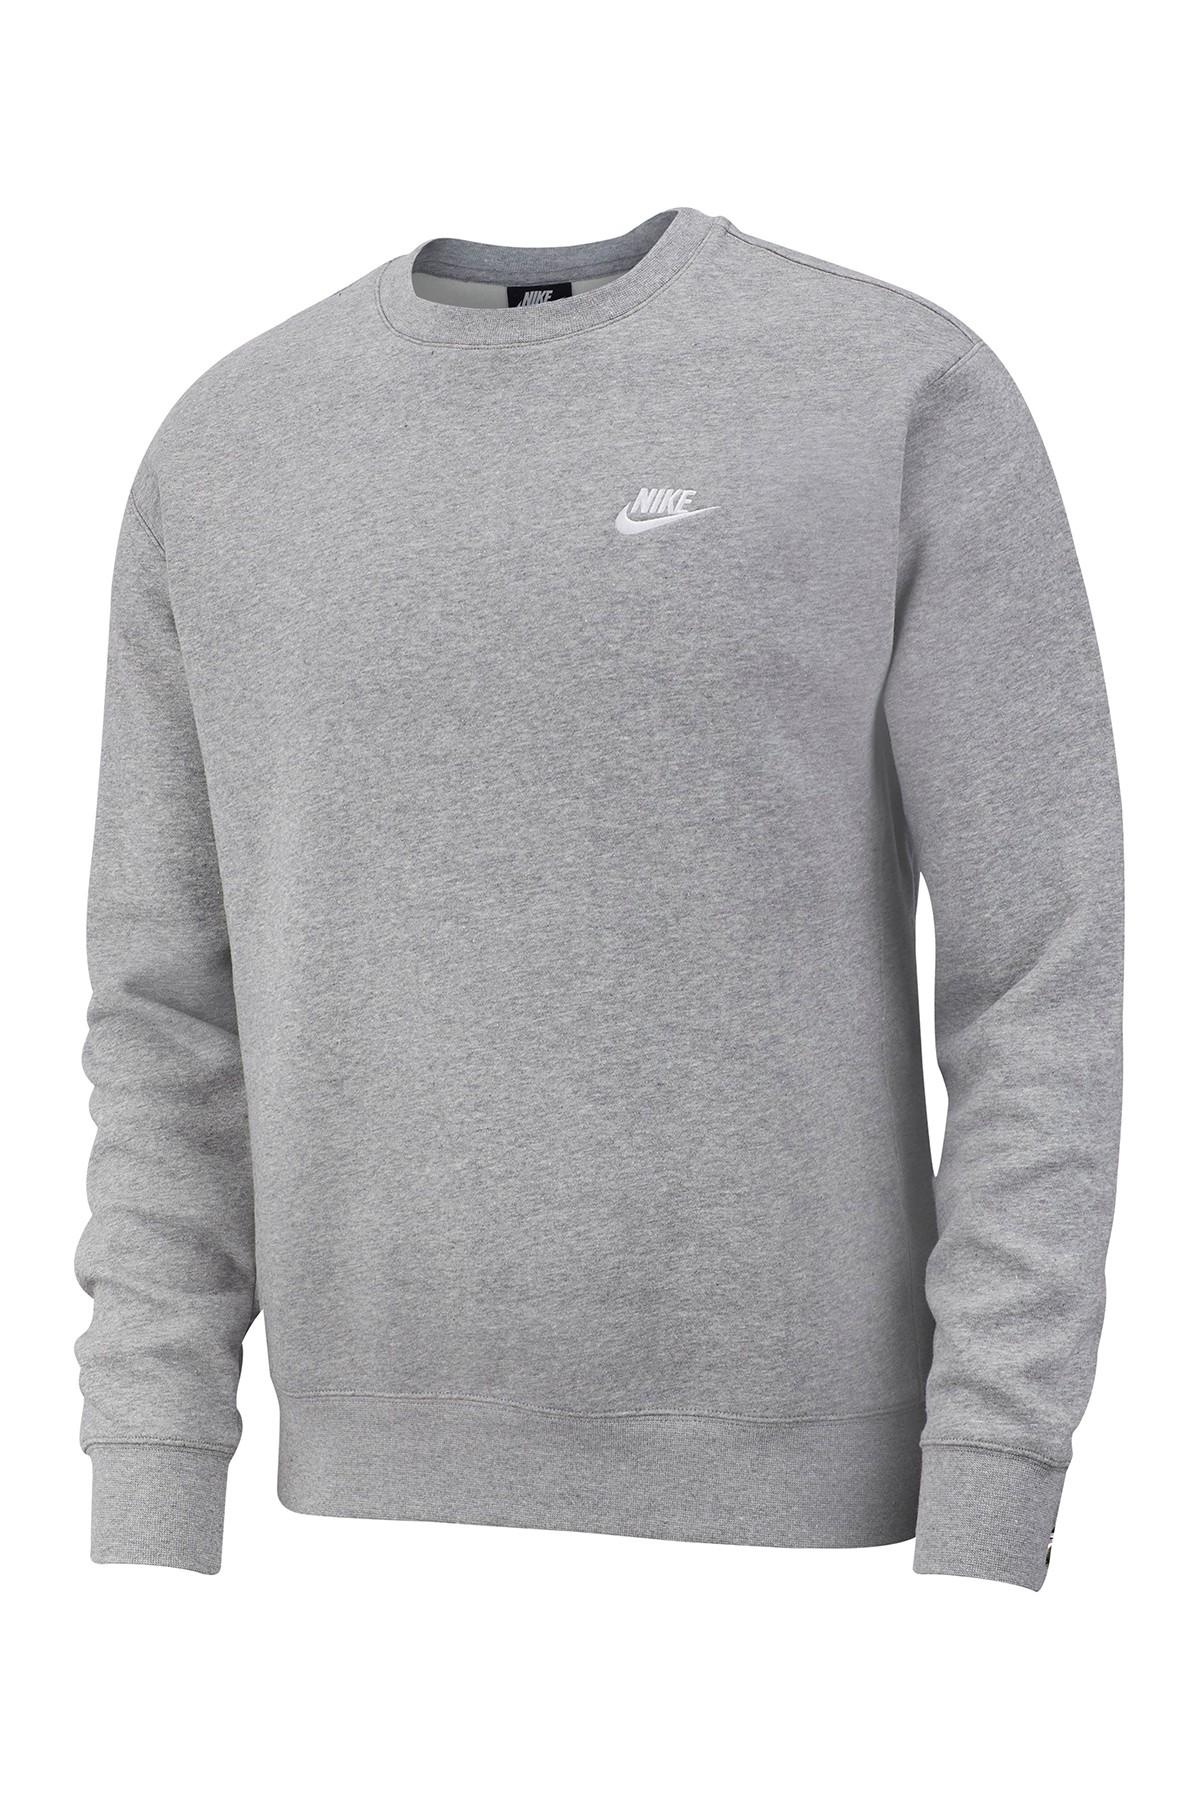 Nike Cotton Crew Neck Club Jumper Grey in d gr h/White (Gray) for Men ...